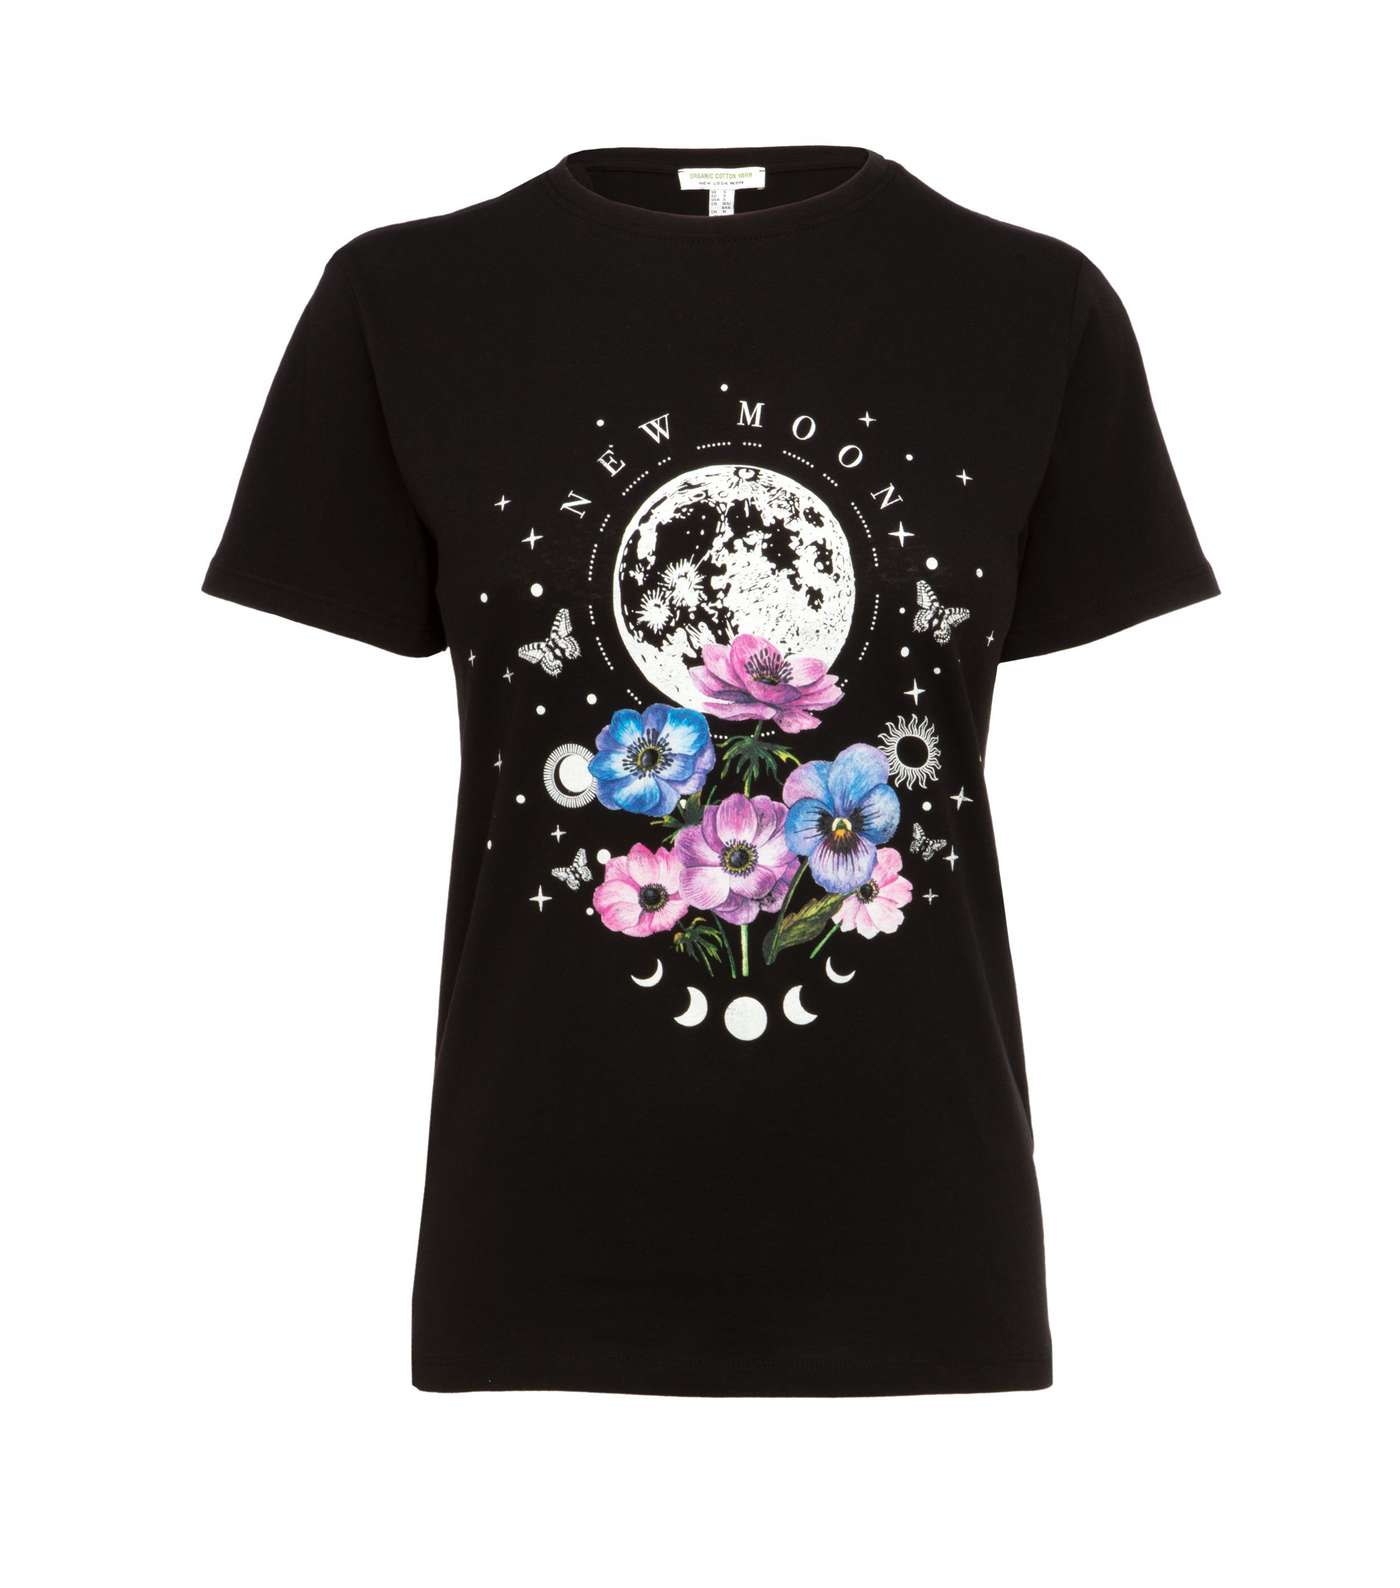 Petite Black Floral New Moon Slogan T-Shirt 